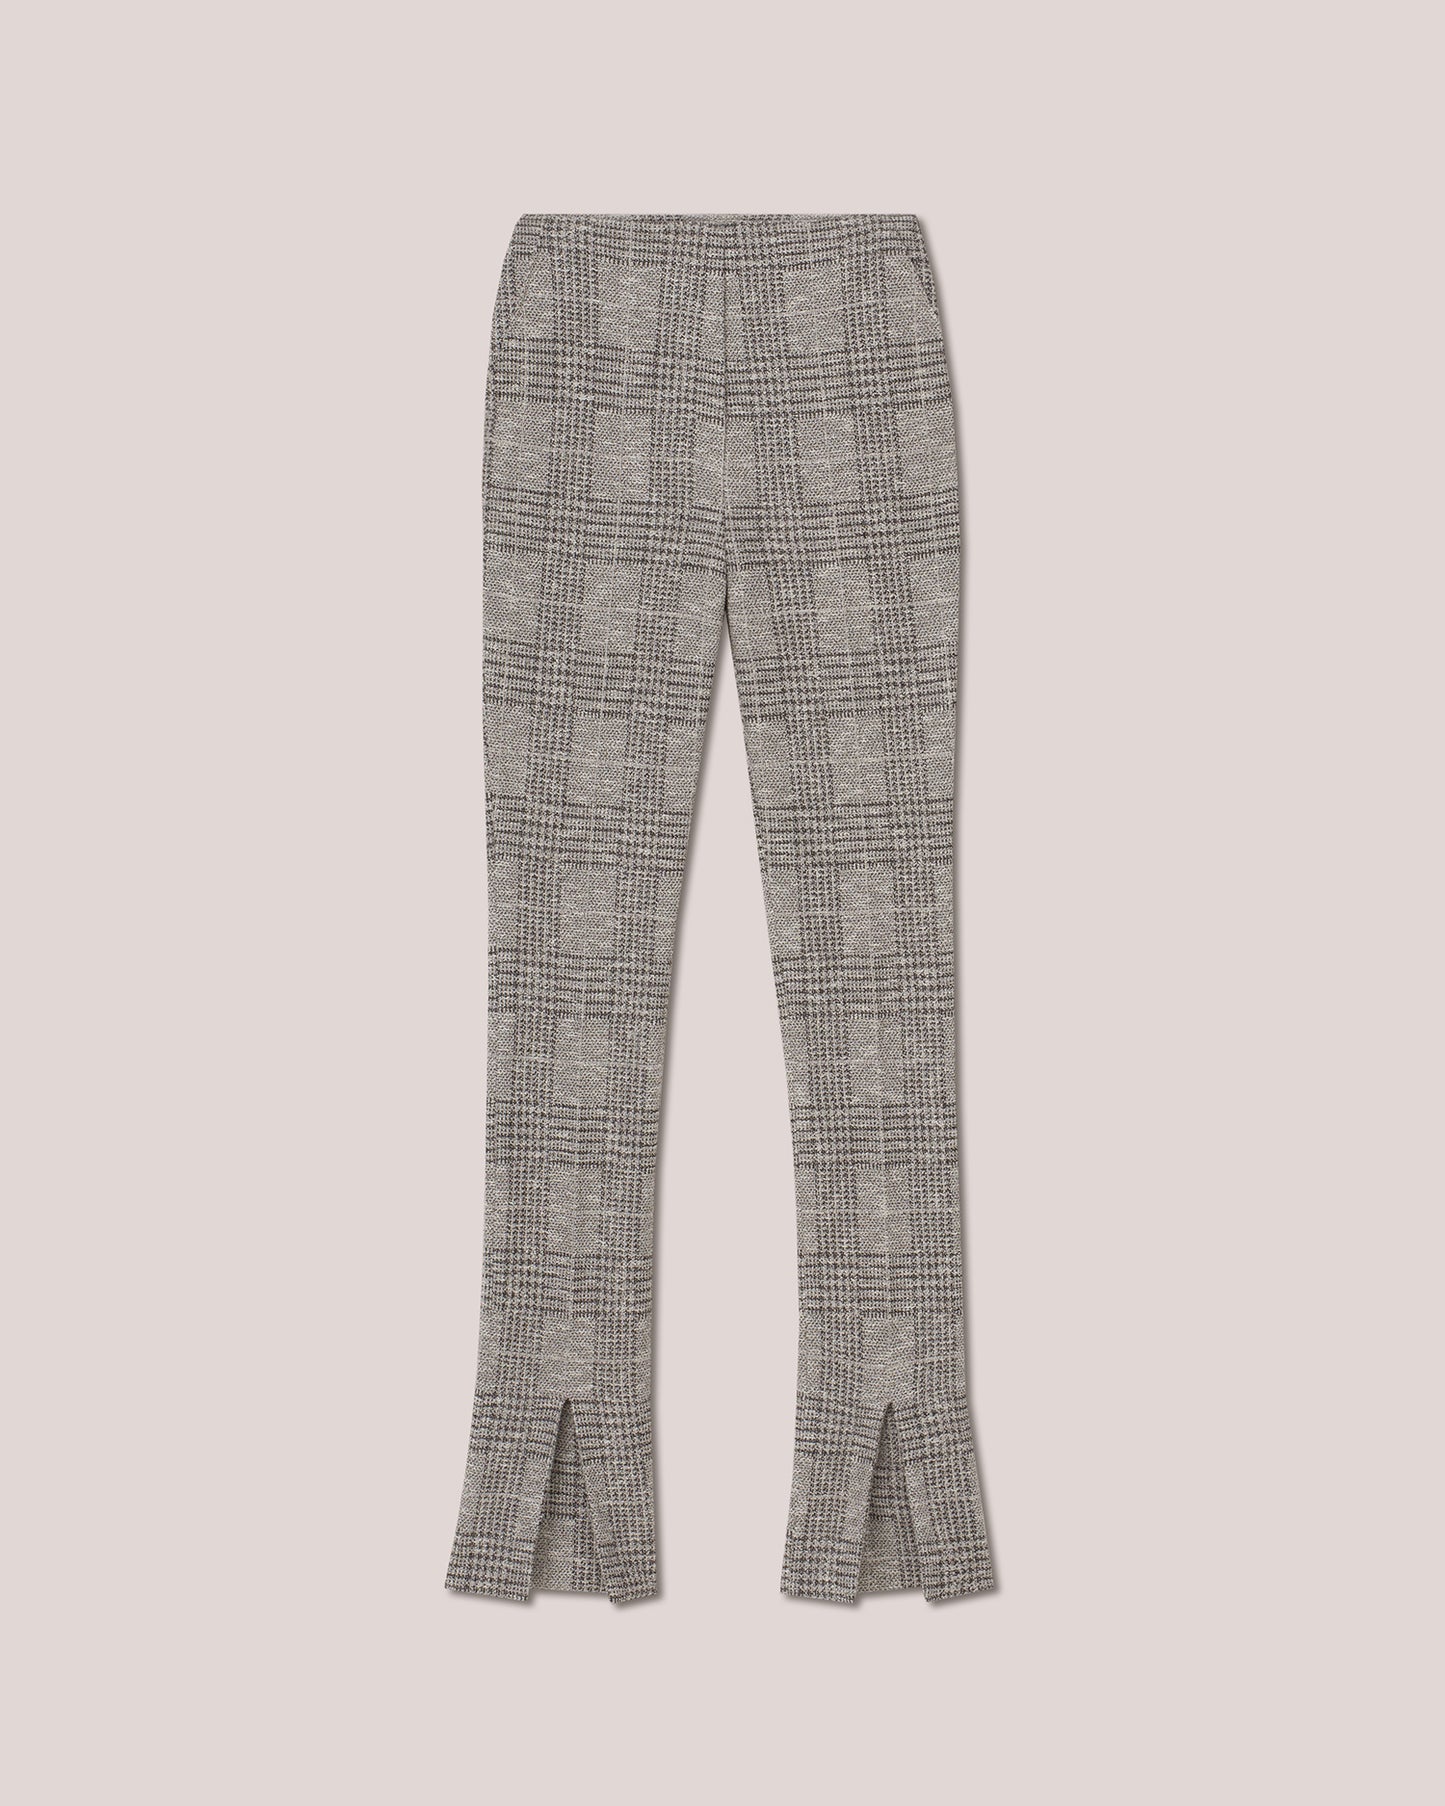 Florine - Archive Tailored Slim Pants - Grey